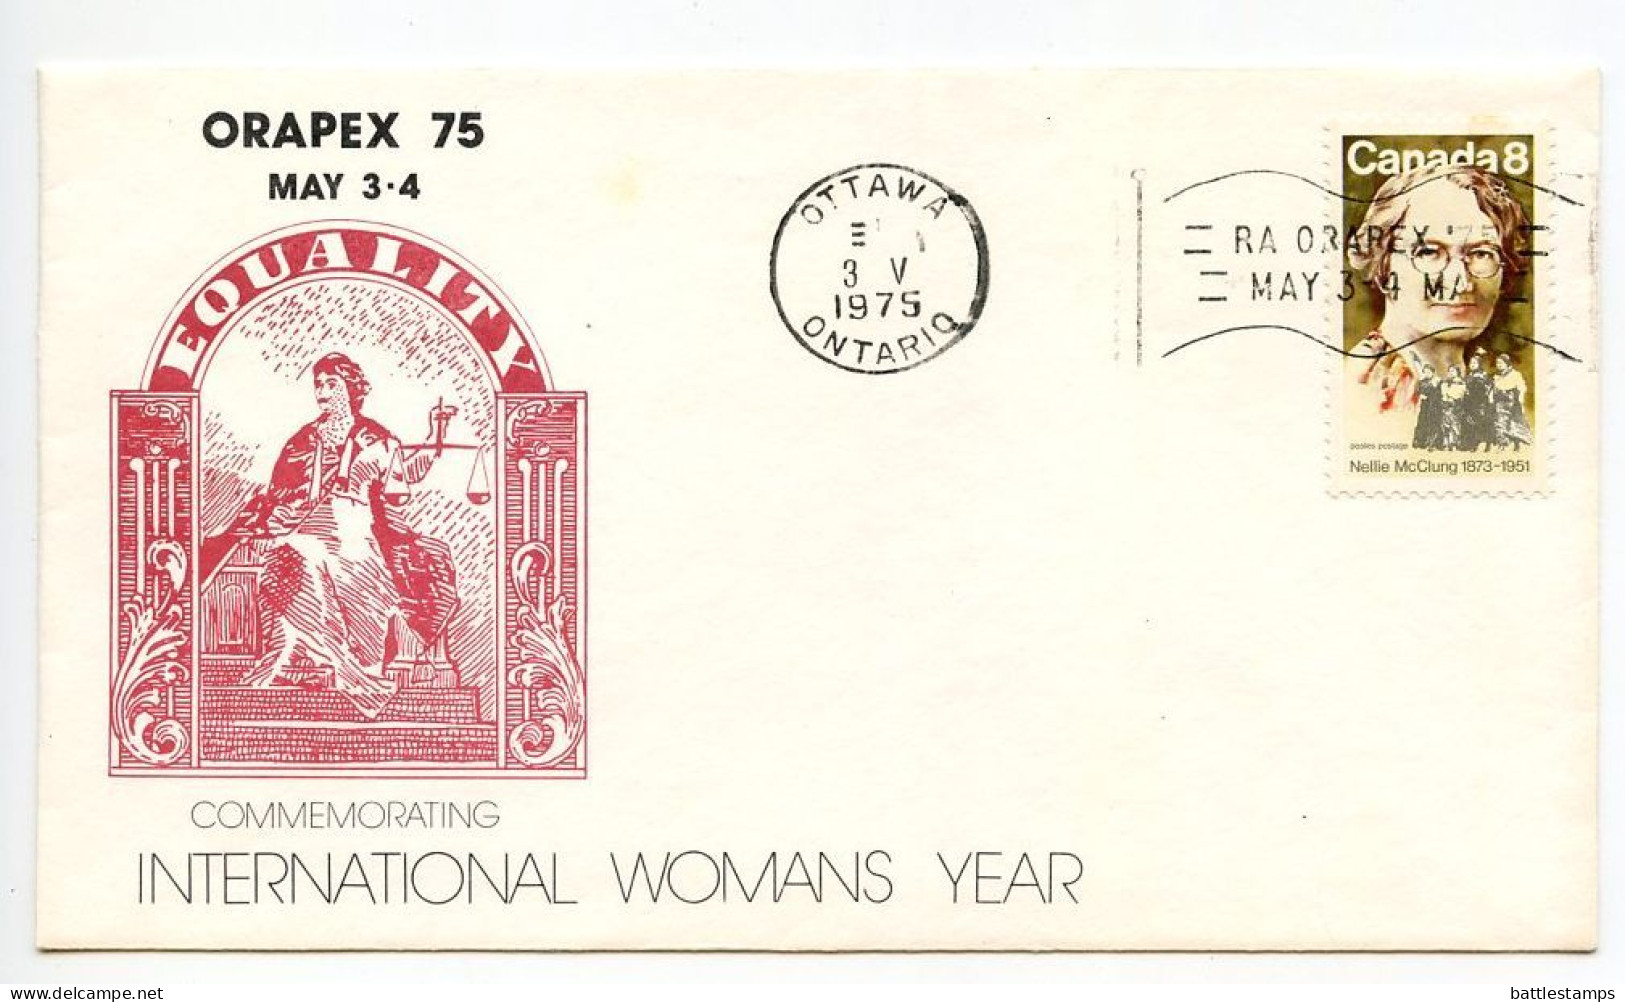 Canada 1975 Commemorative Cover - ORAPEC 75 Philatelic Exhibition - International Womans Year, Scott 622 - Sobres Conmemorativos